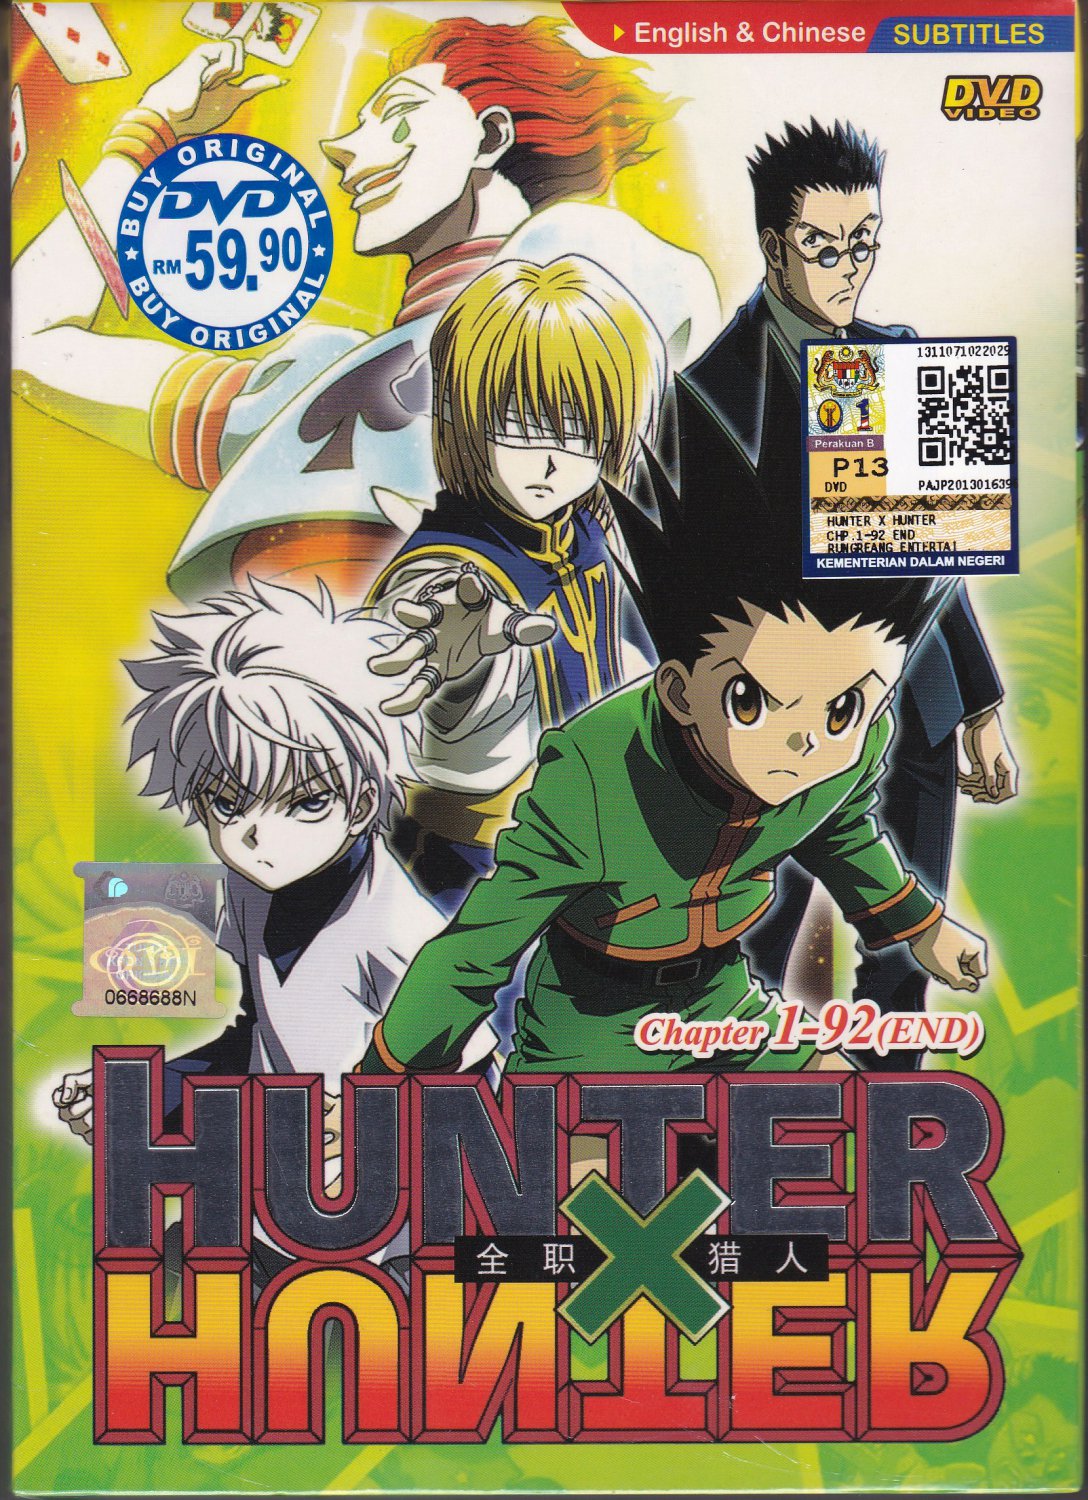 Dvd Anime Hunter X Hunter Vol 1 62end 3 Ova Vol 1 24end Greed Island Region 0